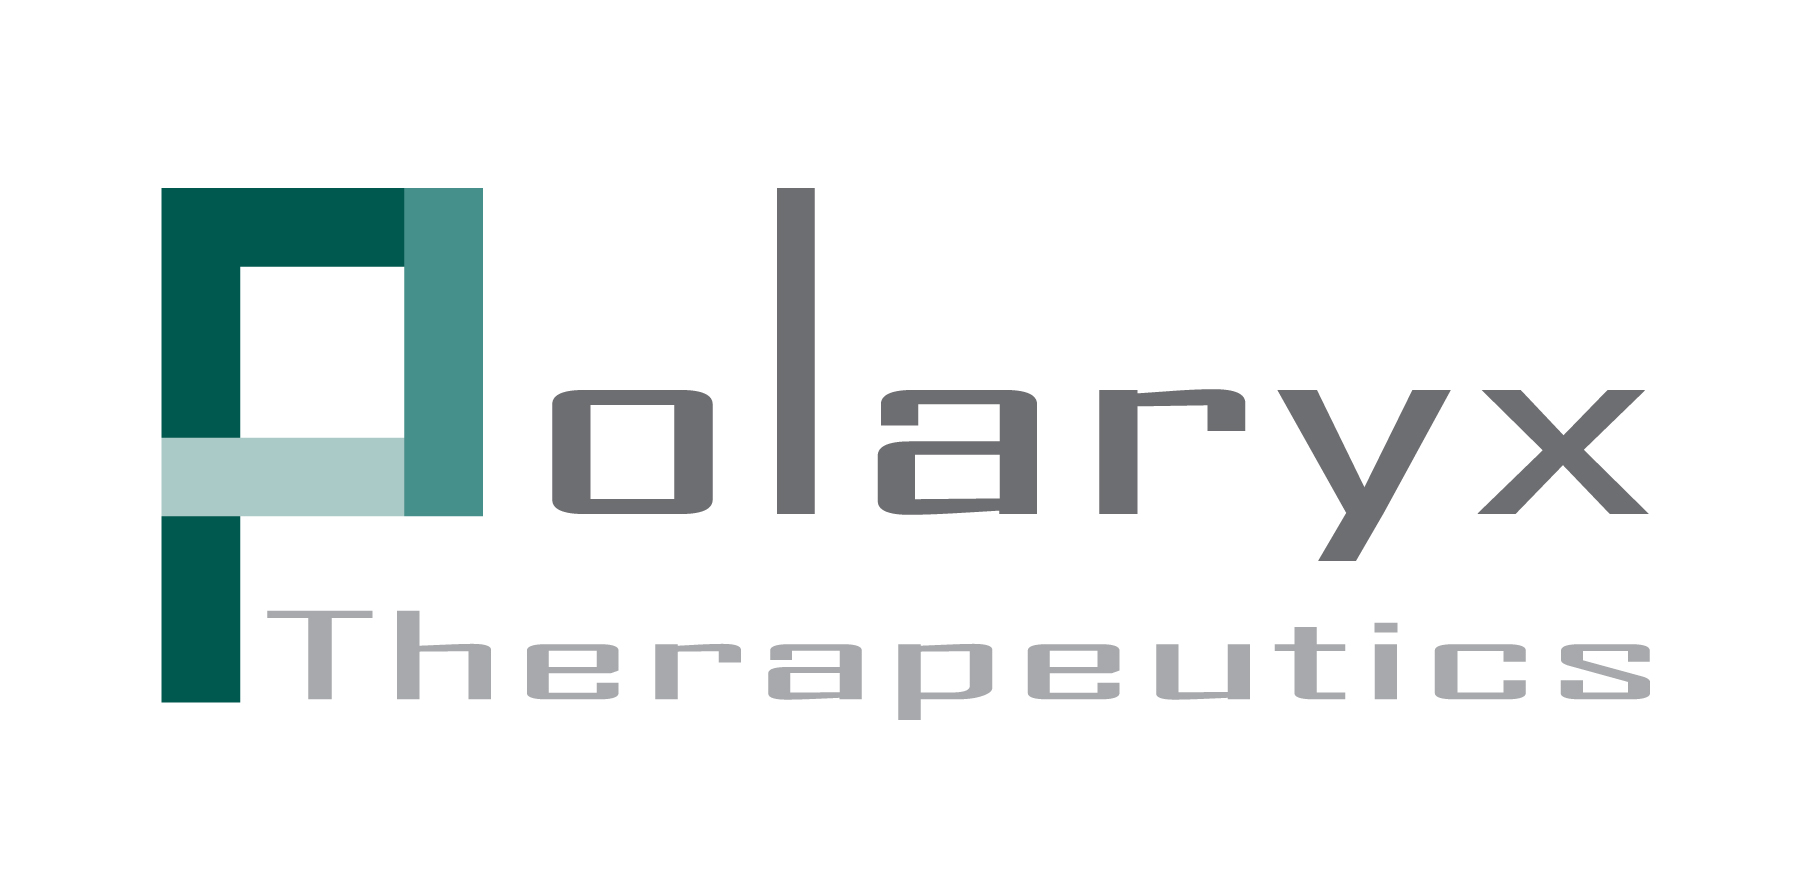 Featured Image for Polaryx Therapeutics, Inc.